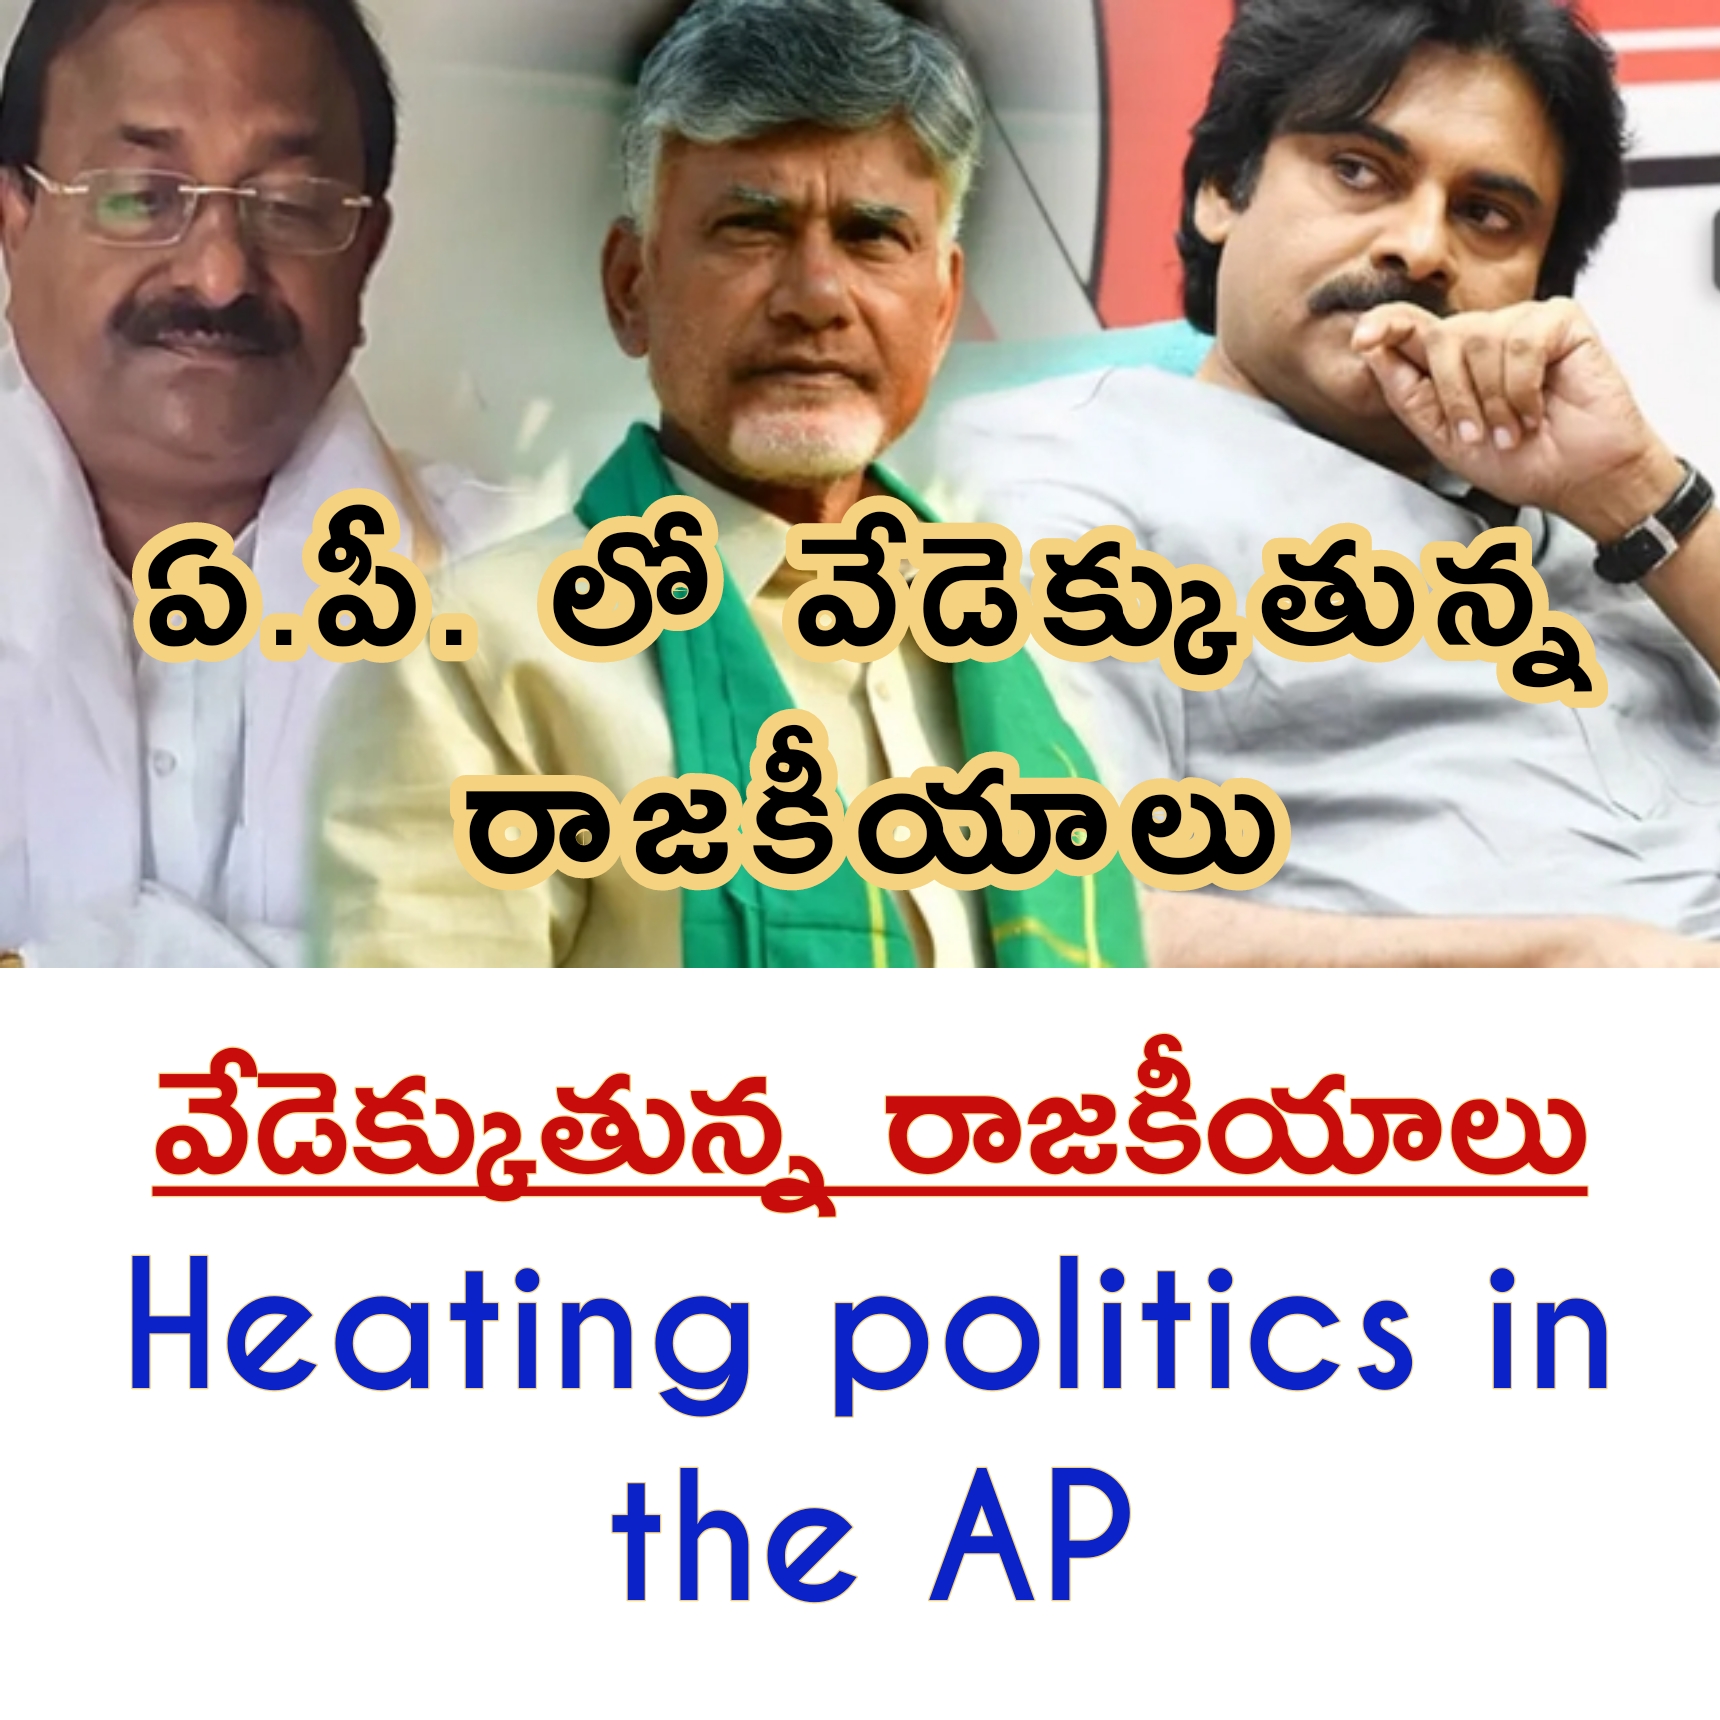 Heating politics in the AP